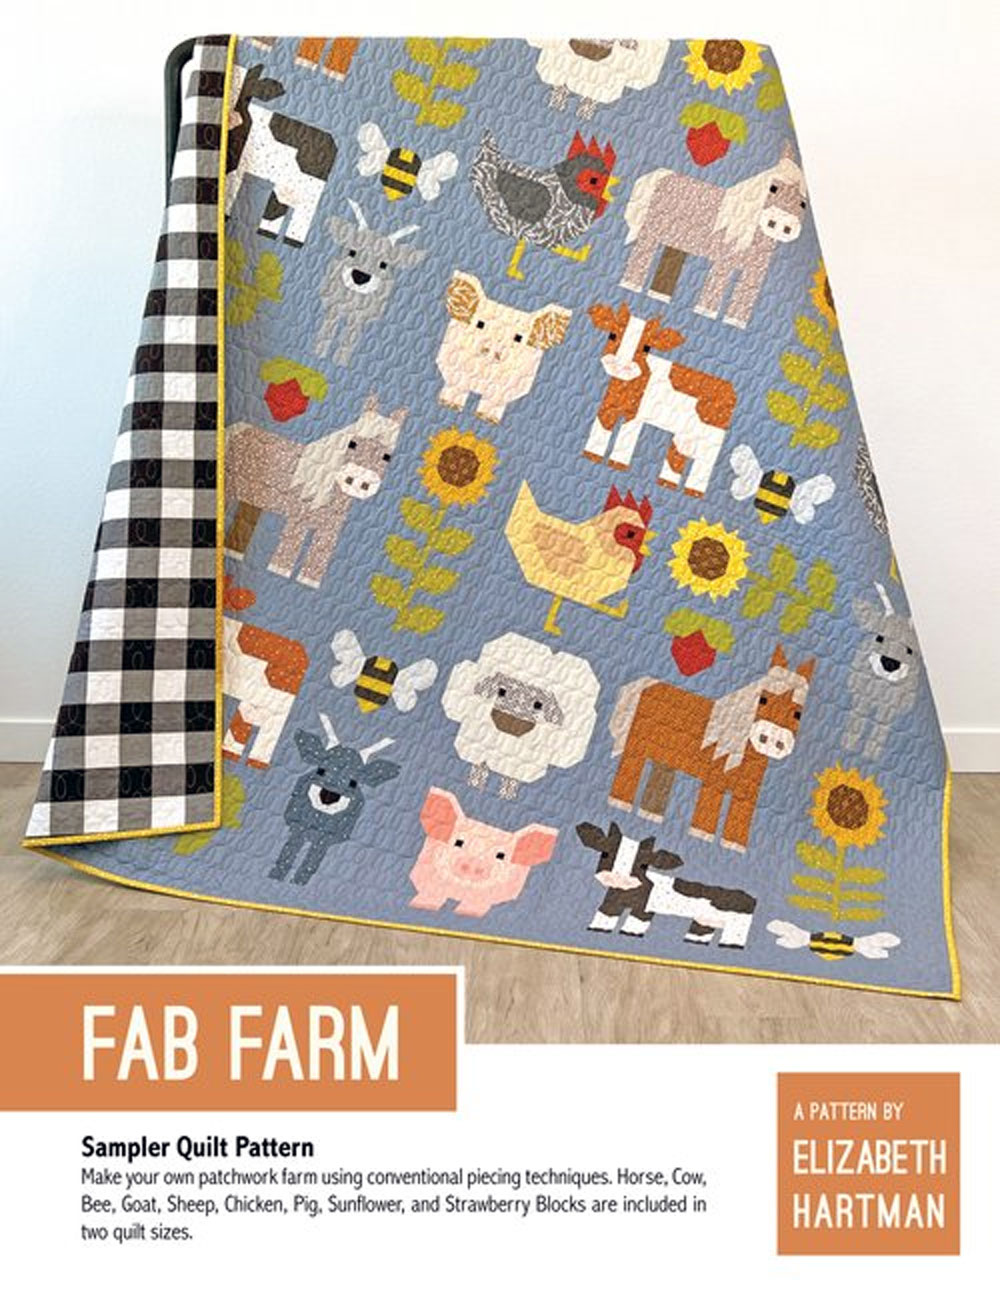 Fab-Farm-quilt-sewing-pattern-Elizabeth-Hartman-front